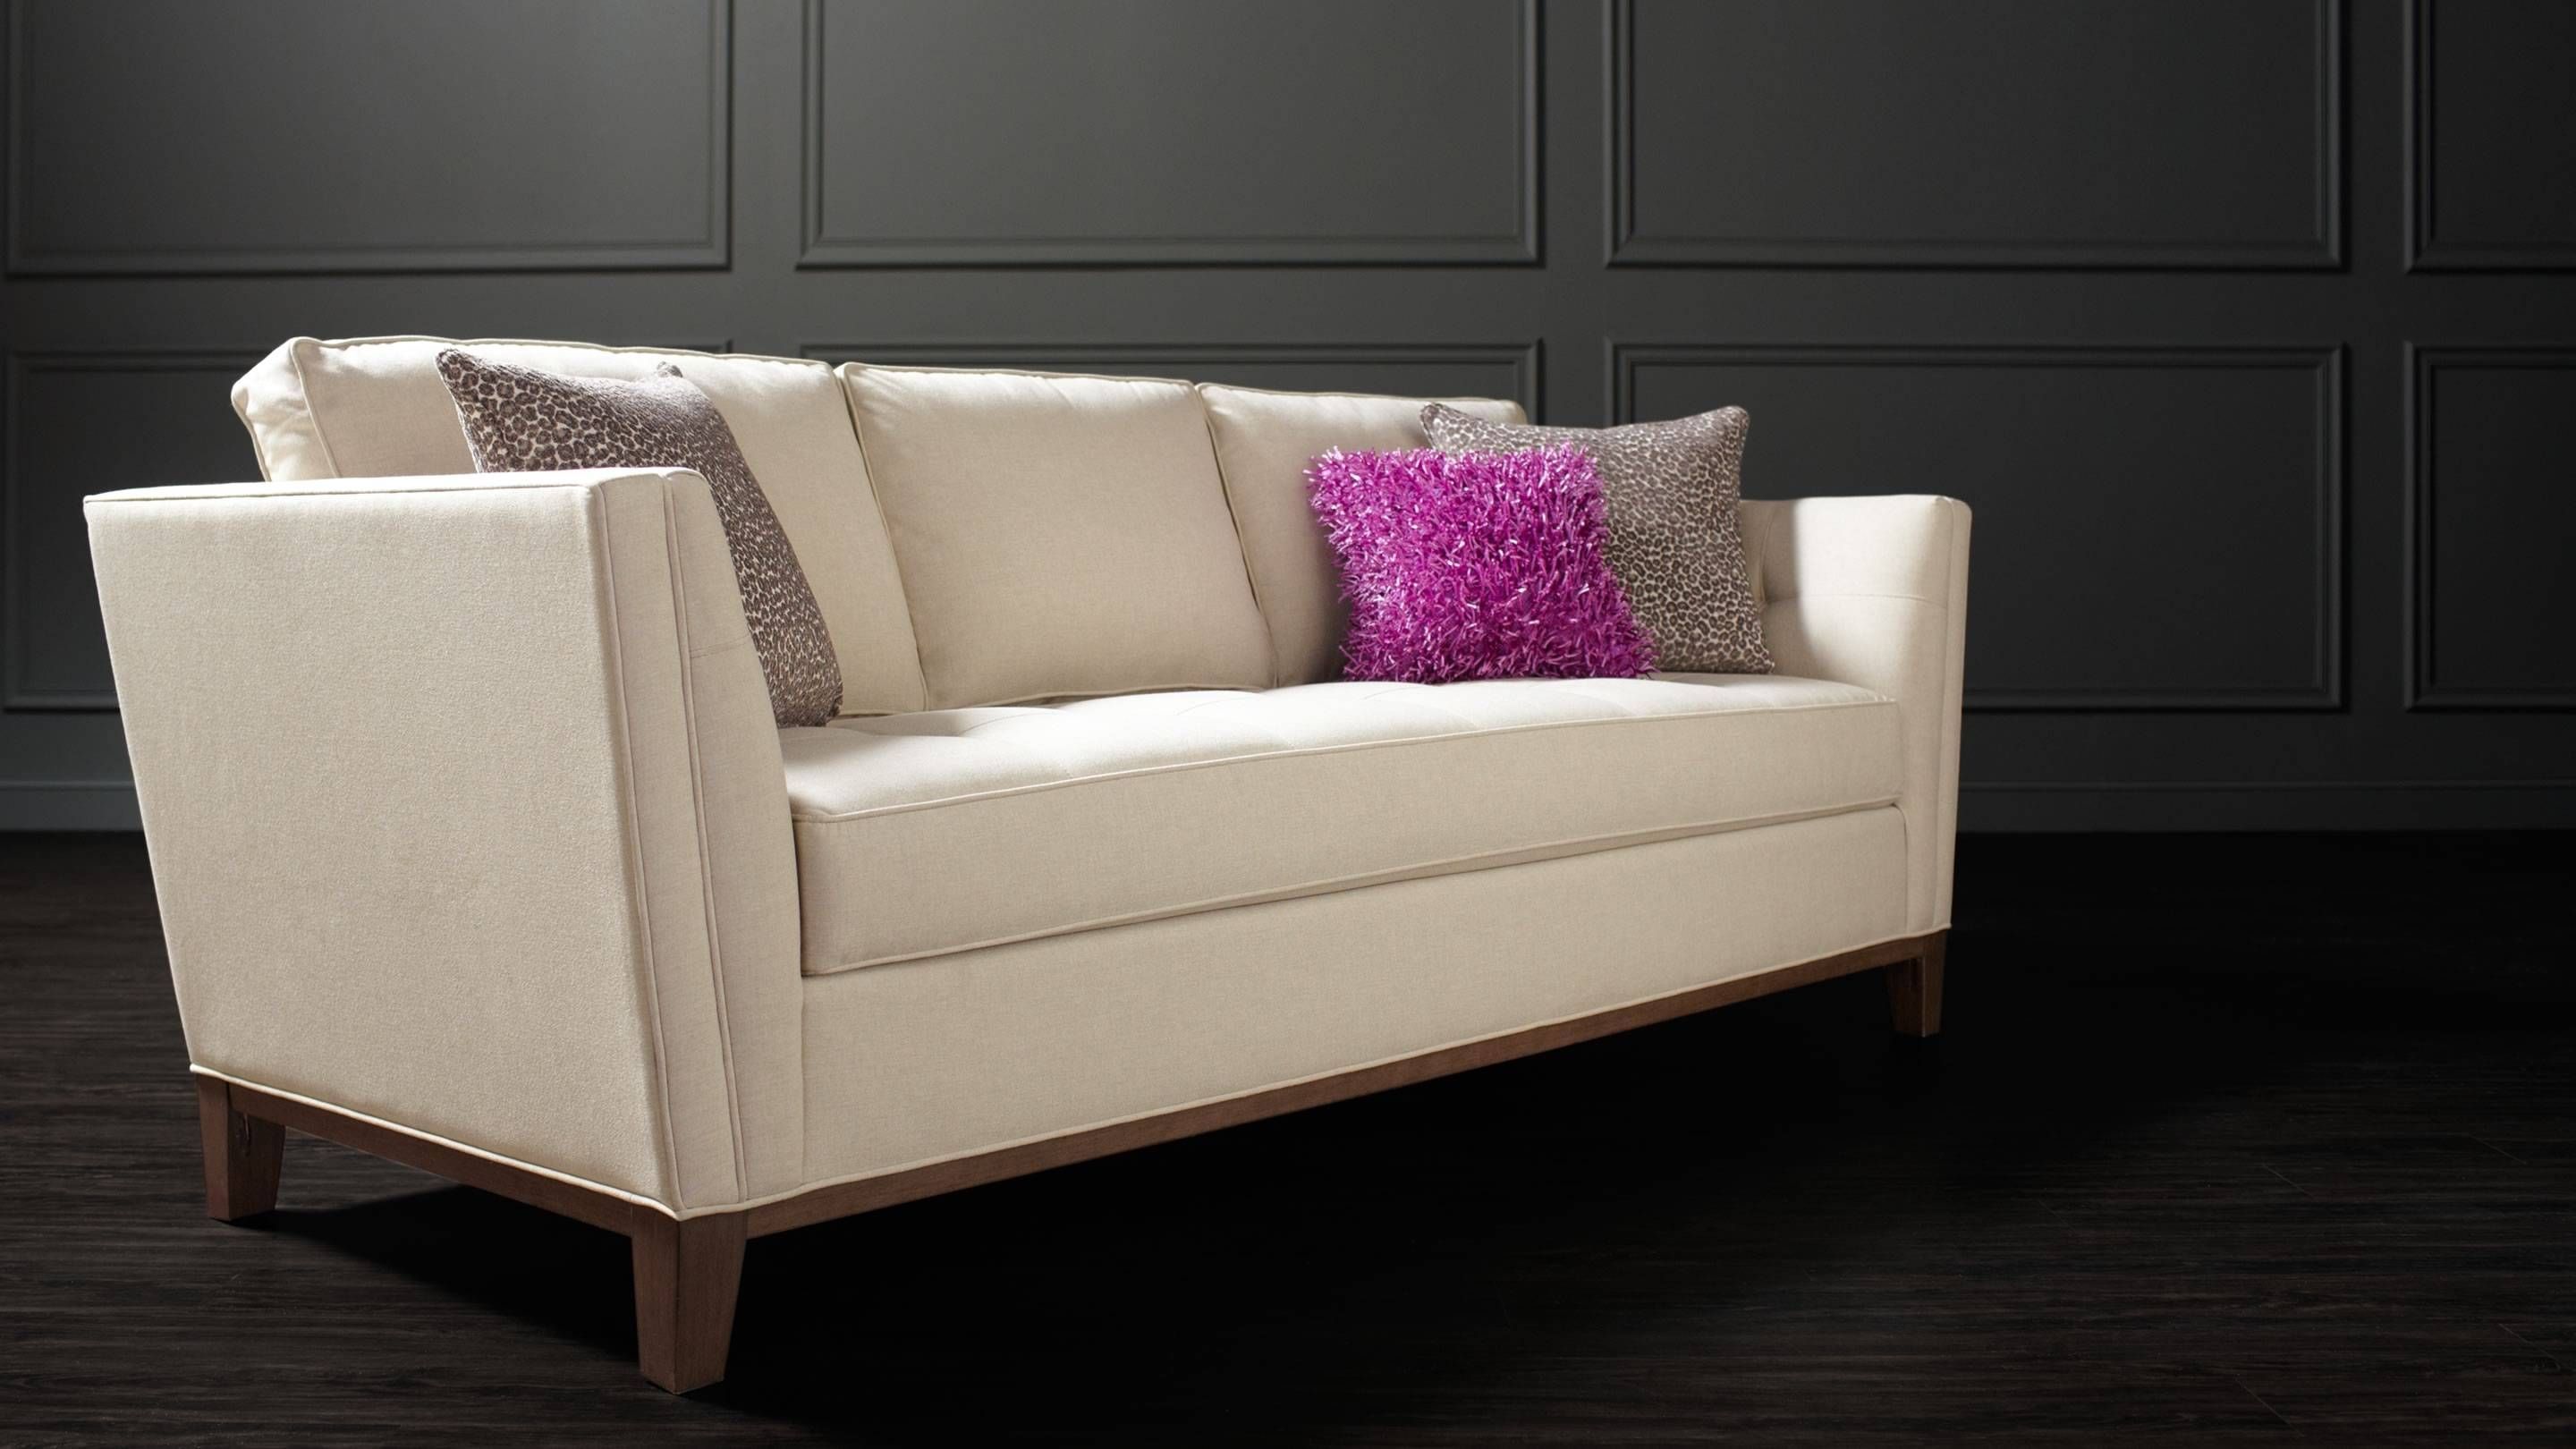 Living Room: Using Elegant Cindy Crawford Sectional Sofa For Regarding Metropolis Cindy Crawford Sectional Sofas (View 9 of 15)